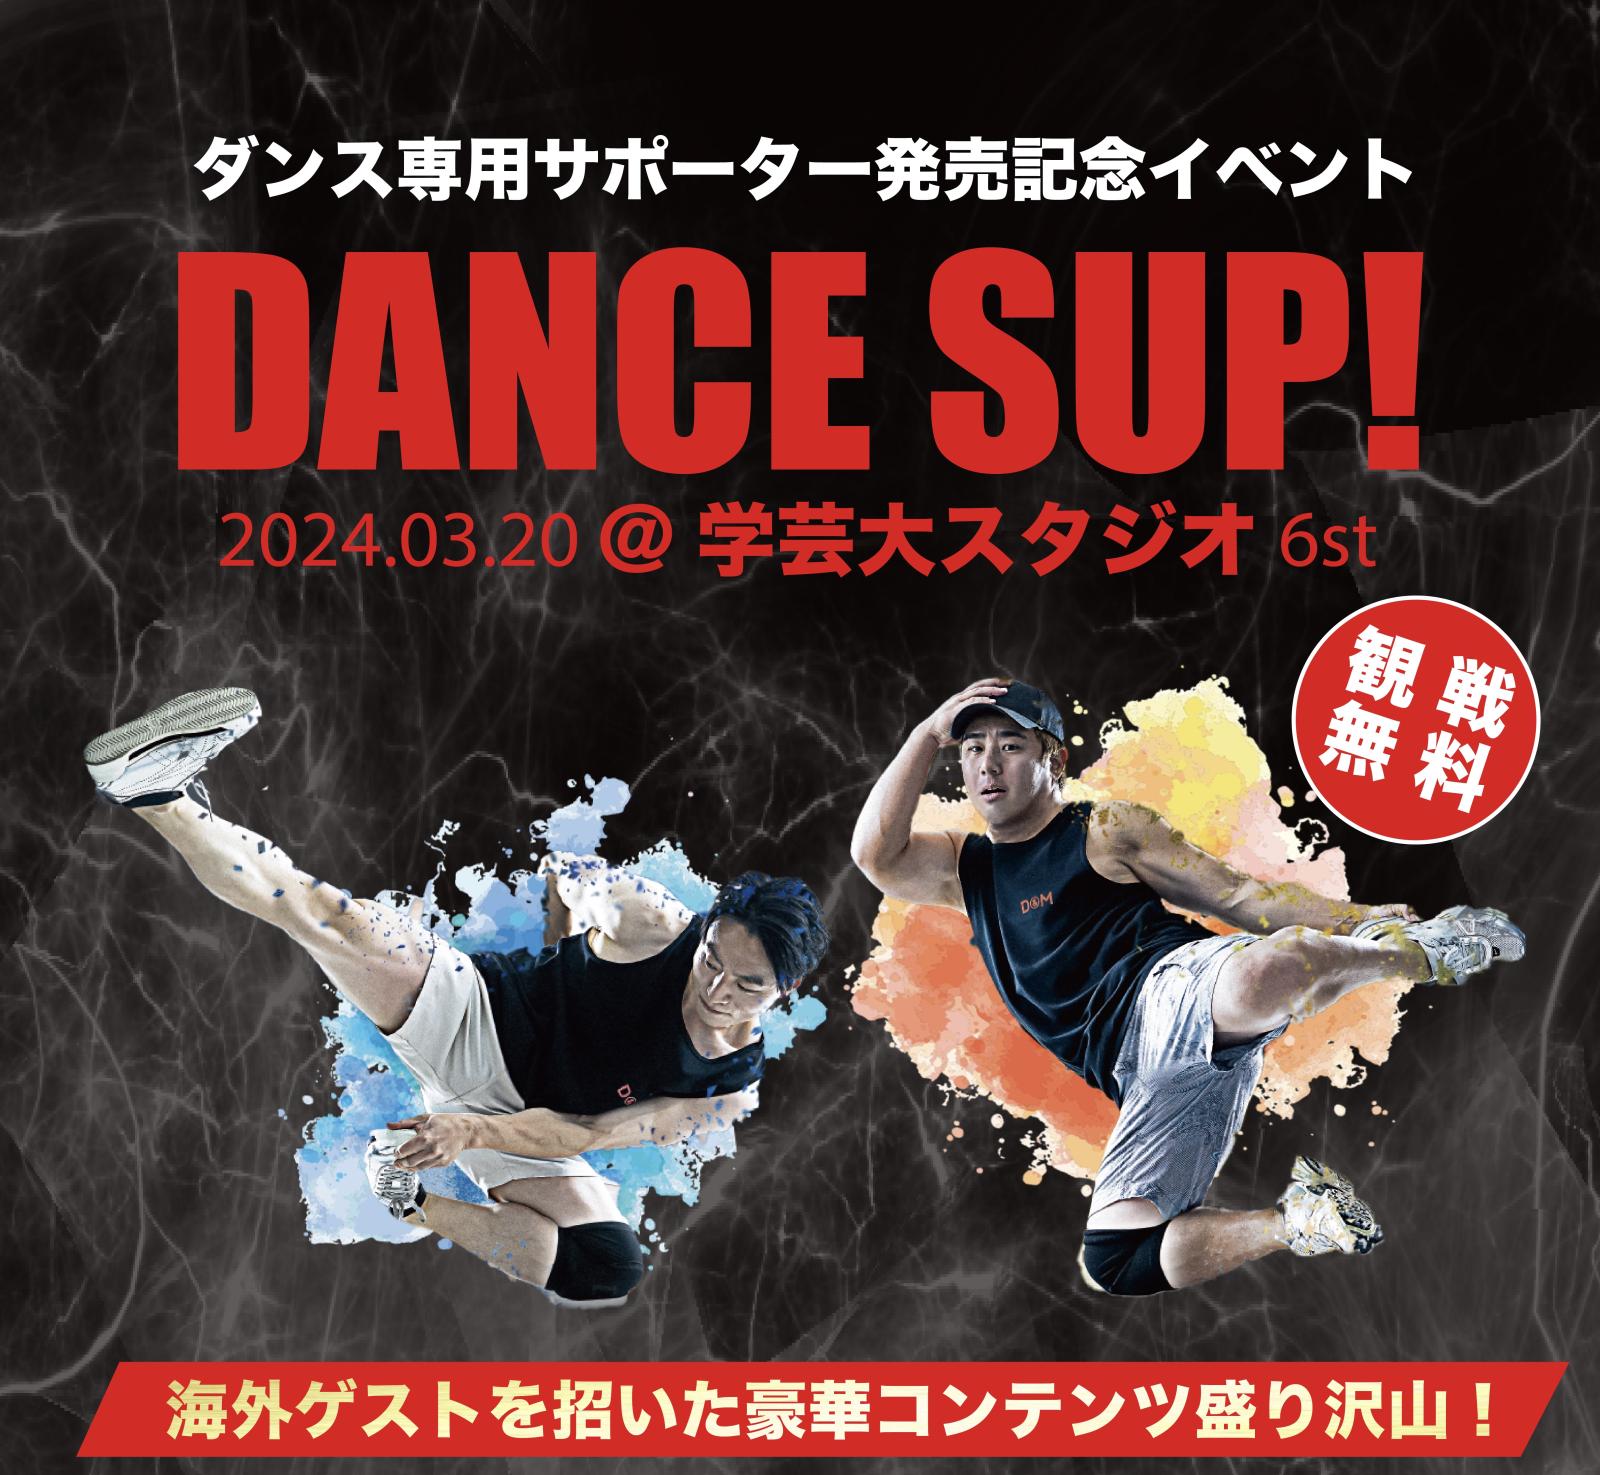 【DANCE SUP!】スペシャルWS&バトルイベント